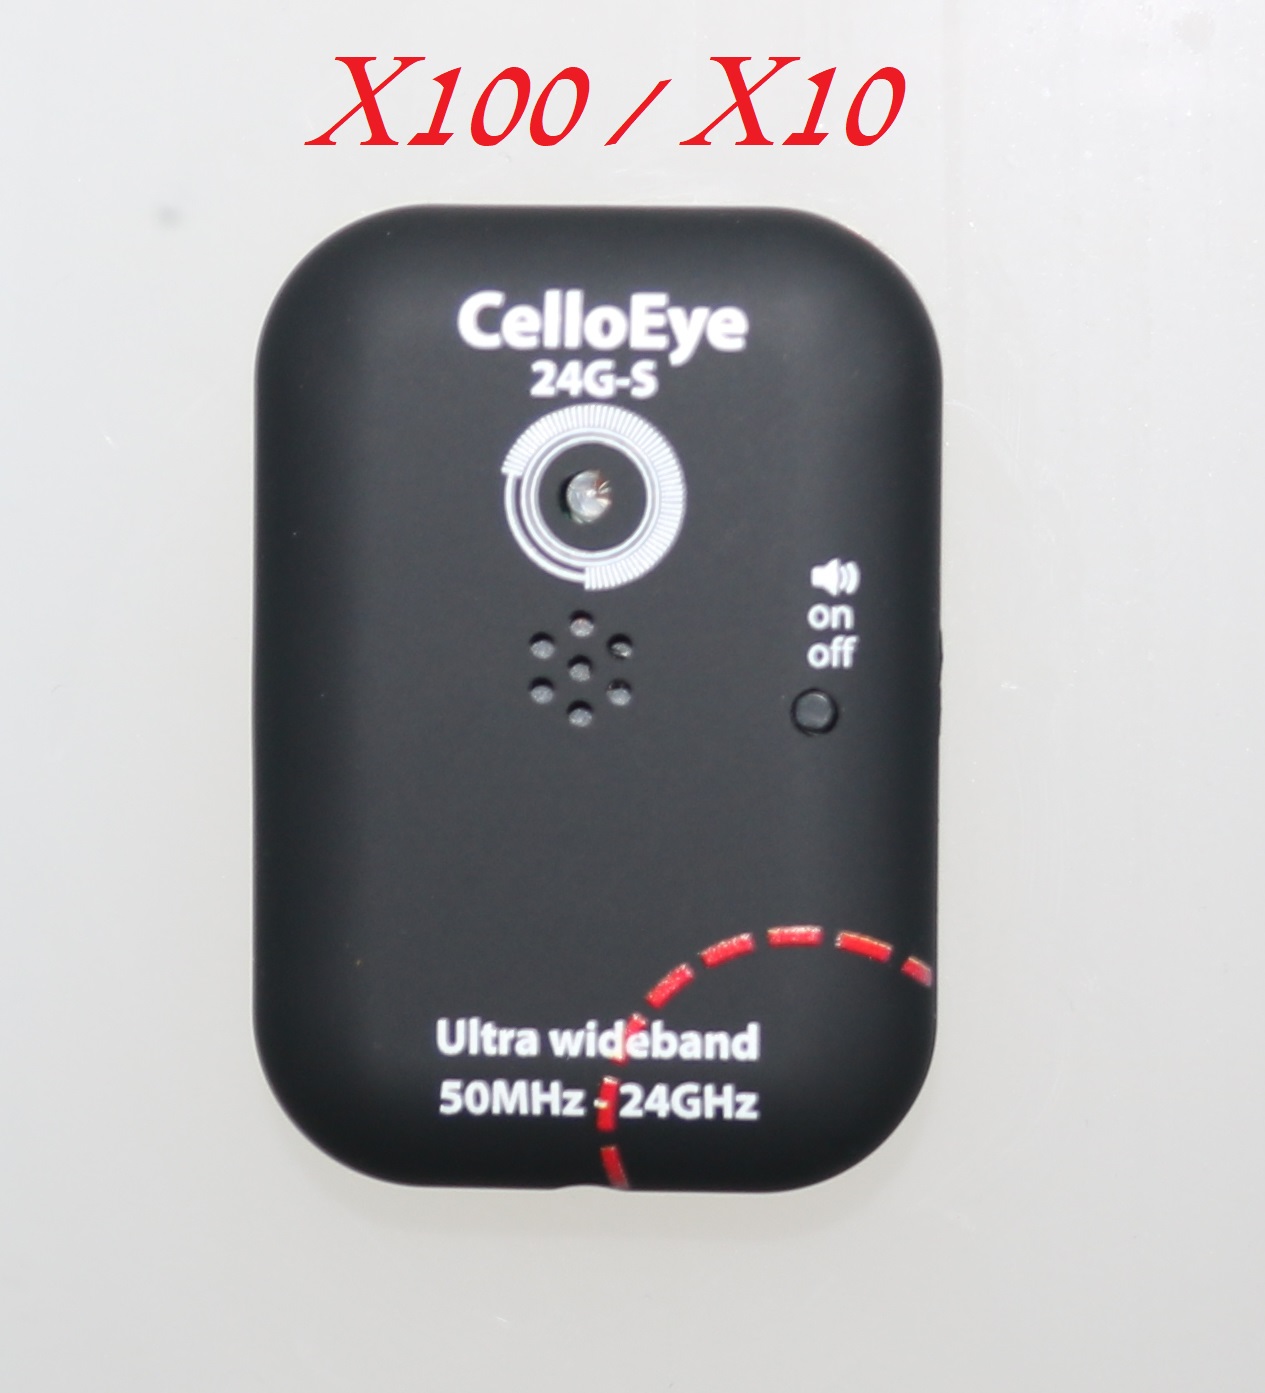 Increase CelloEye 24Gs sensitivity by X100 or X10